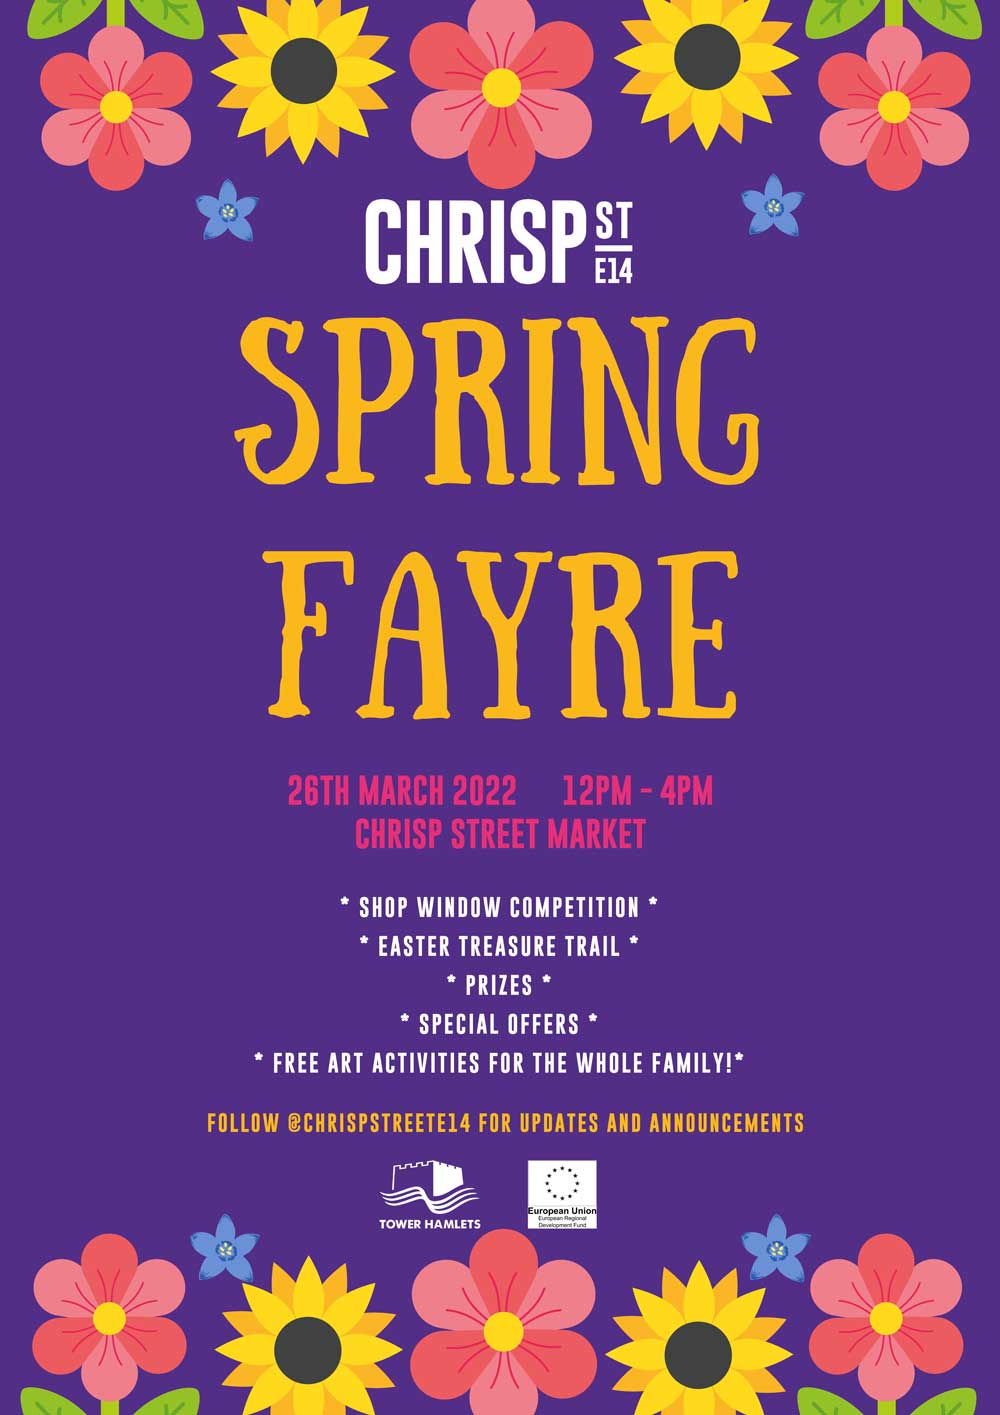 Chrisp Street Market Spring Fayre poster.